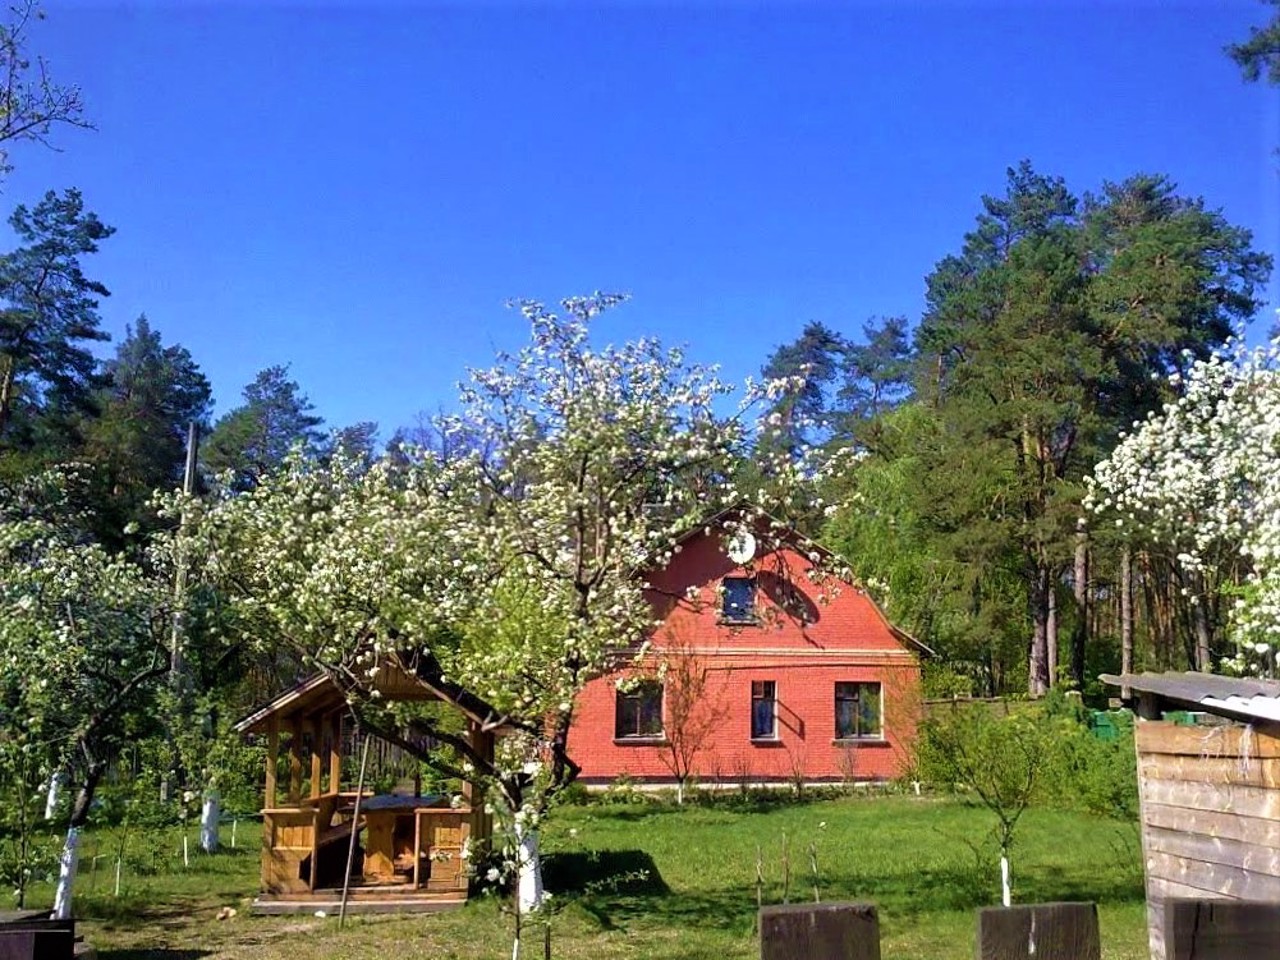 Horenka village